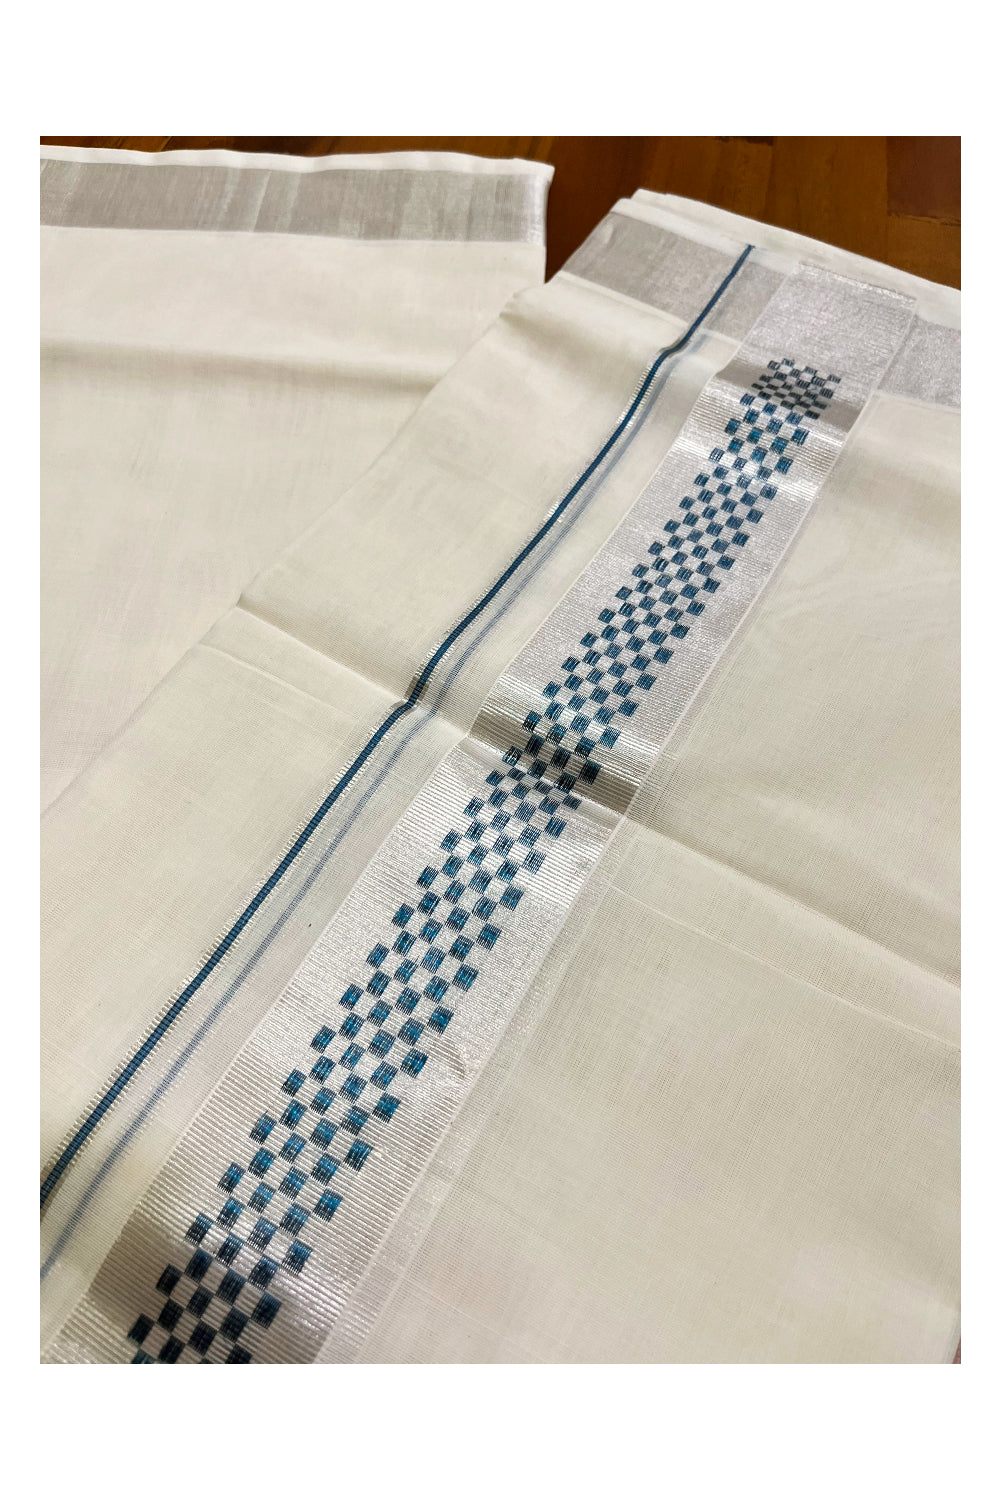 Southloom Premium Handloom Pure Cotton Mundu with Silver and Blue Kasavu Woven Border